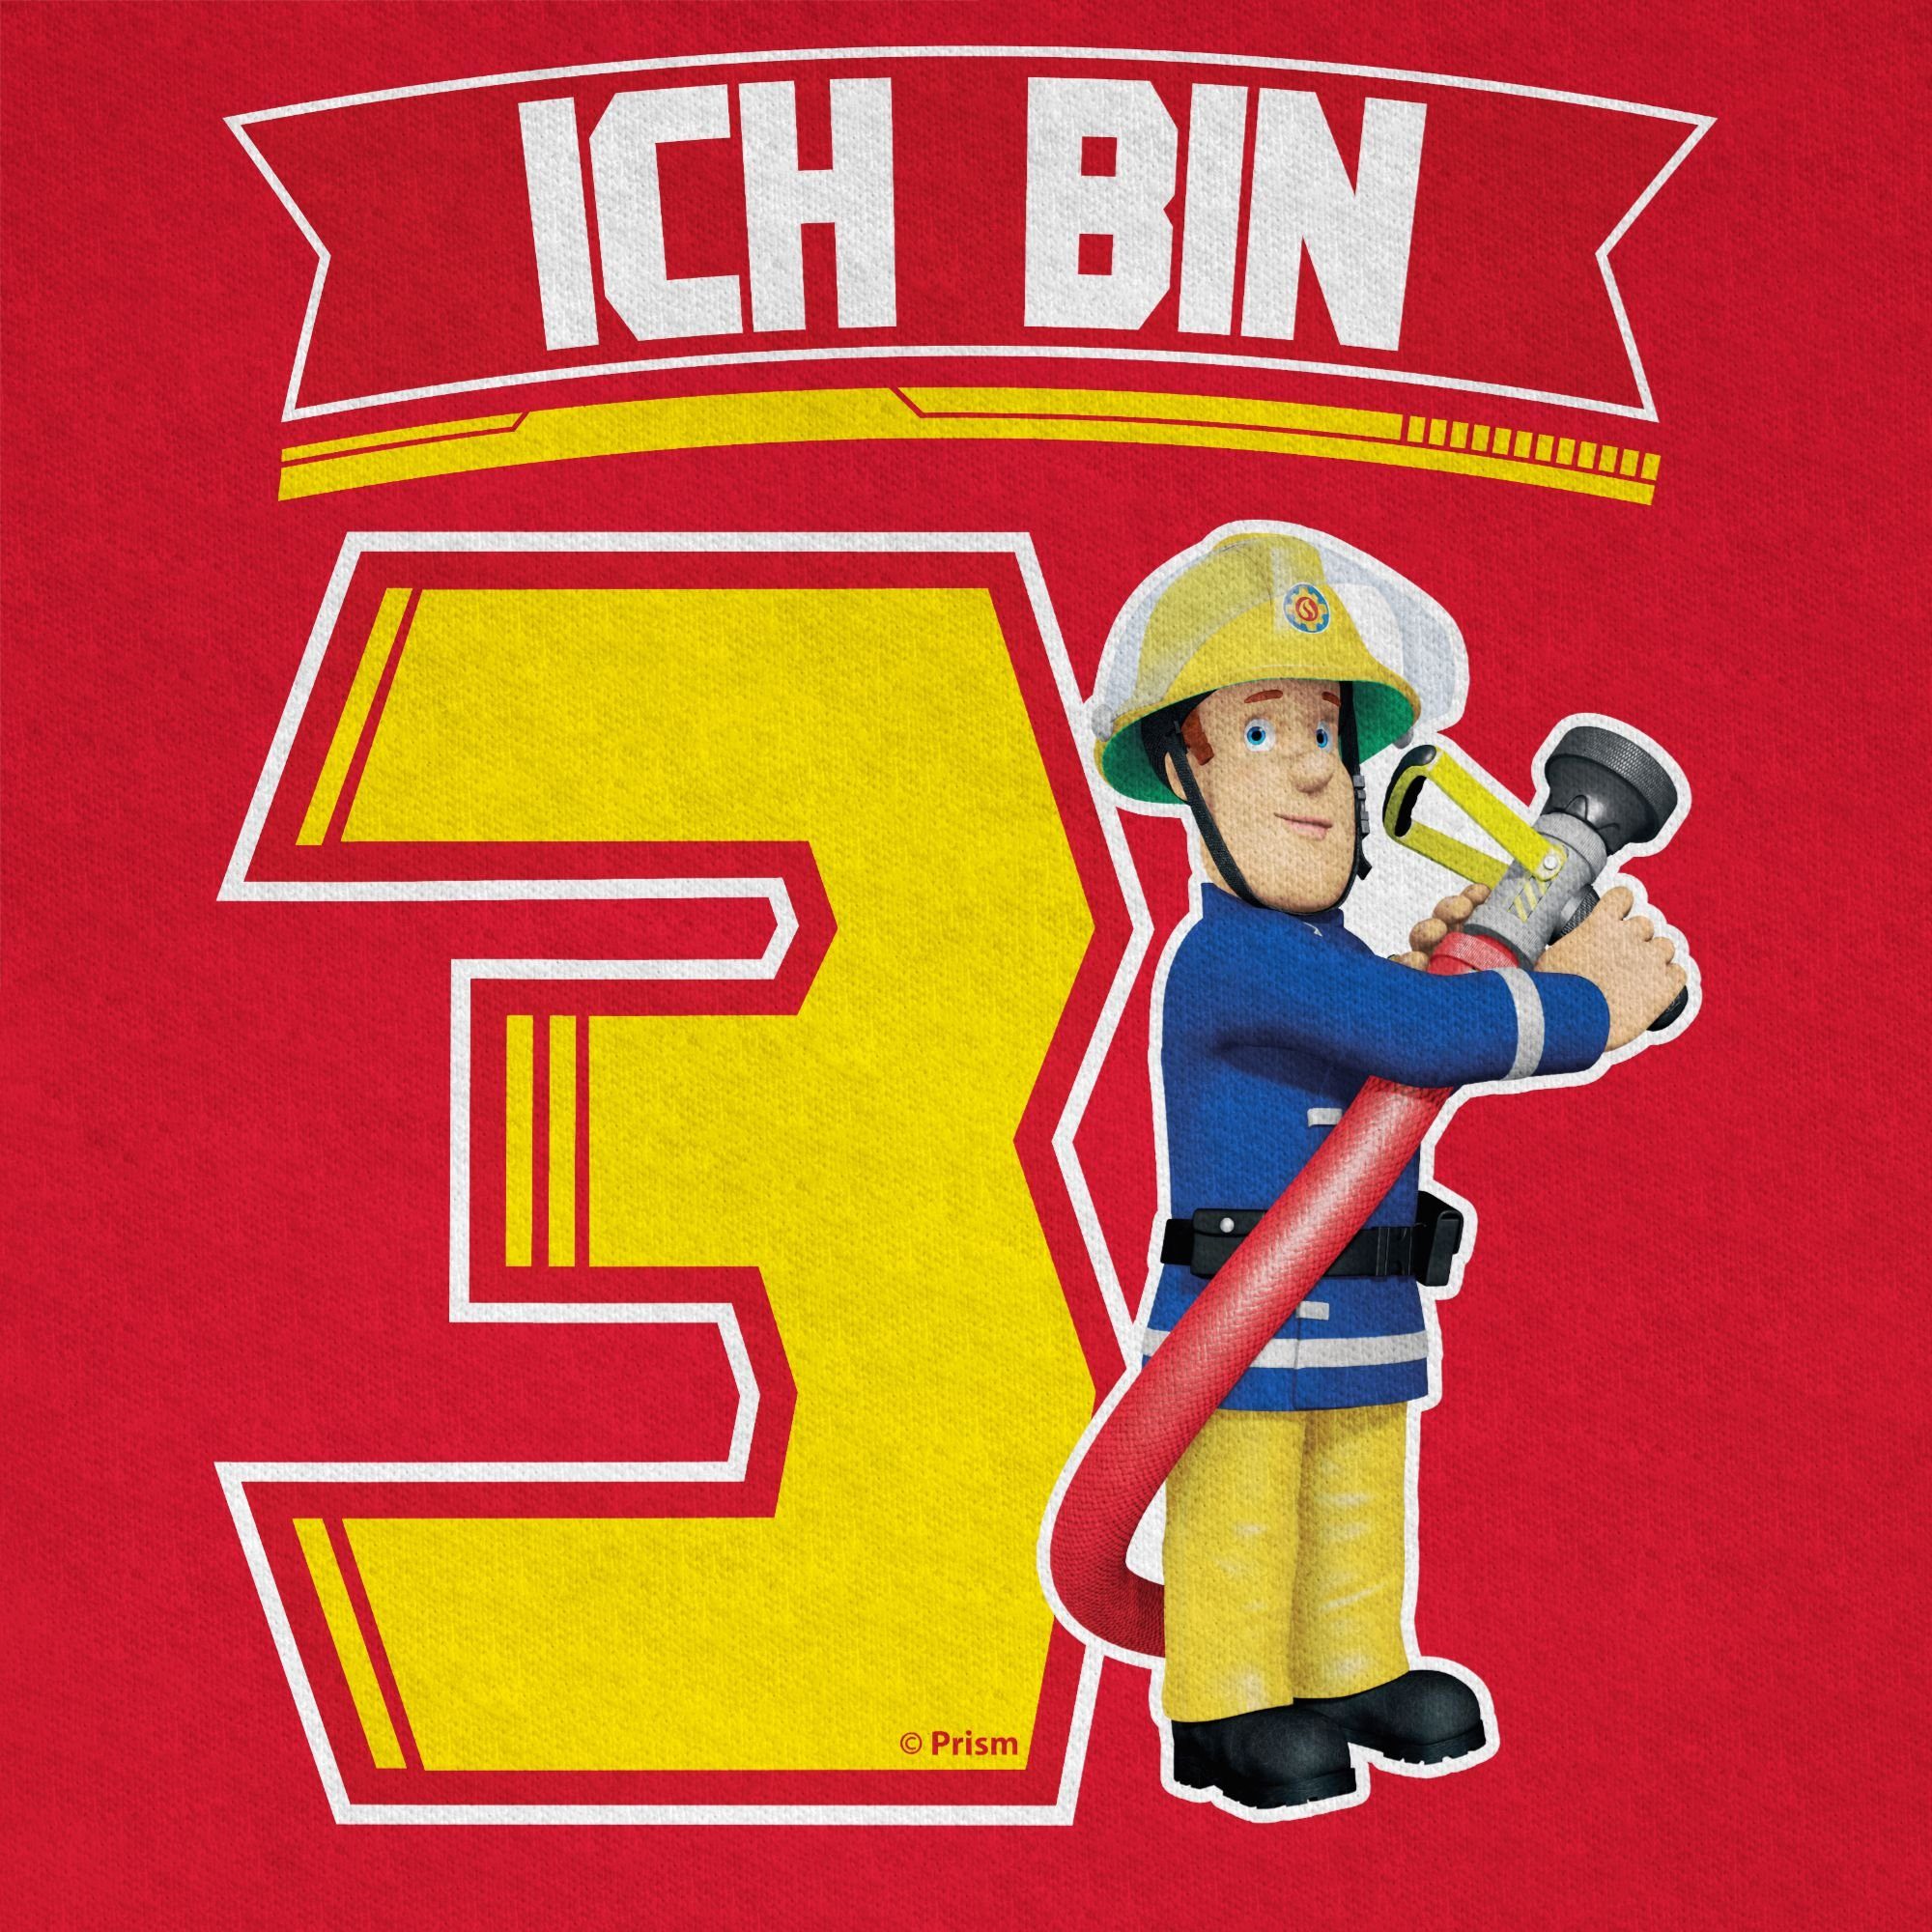 T-Shirt Feuerwehrmann Sam Sam Jungen - Shirtracer Ich bin Rot 02 3